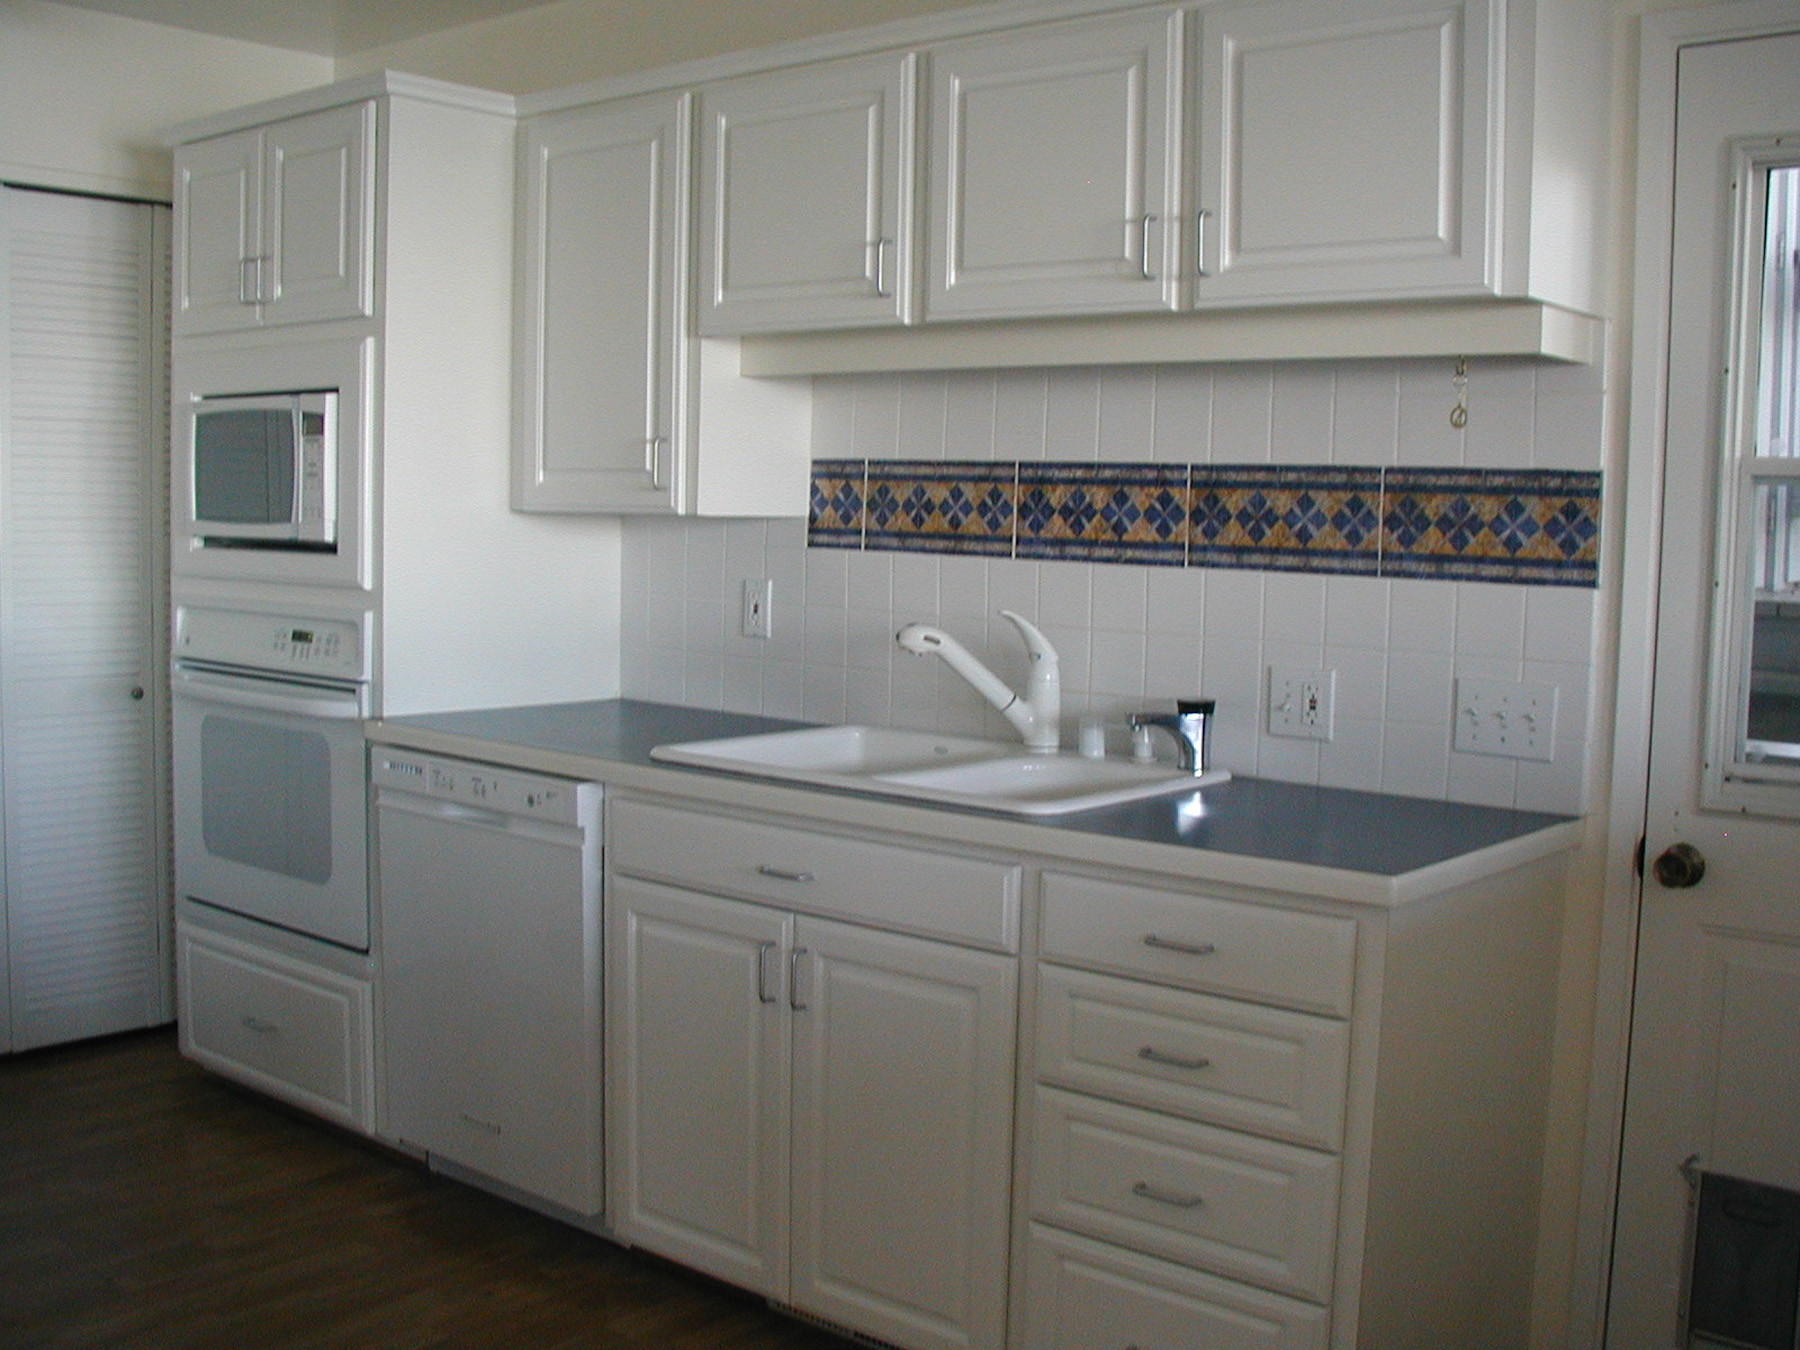 Kitchen Tile Design
 Include decorative tile in your kitchen or bath design